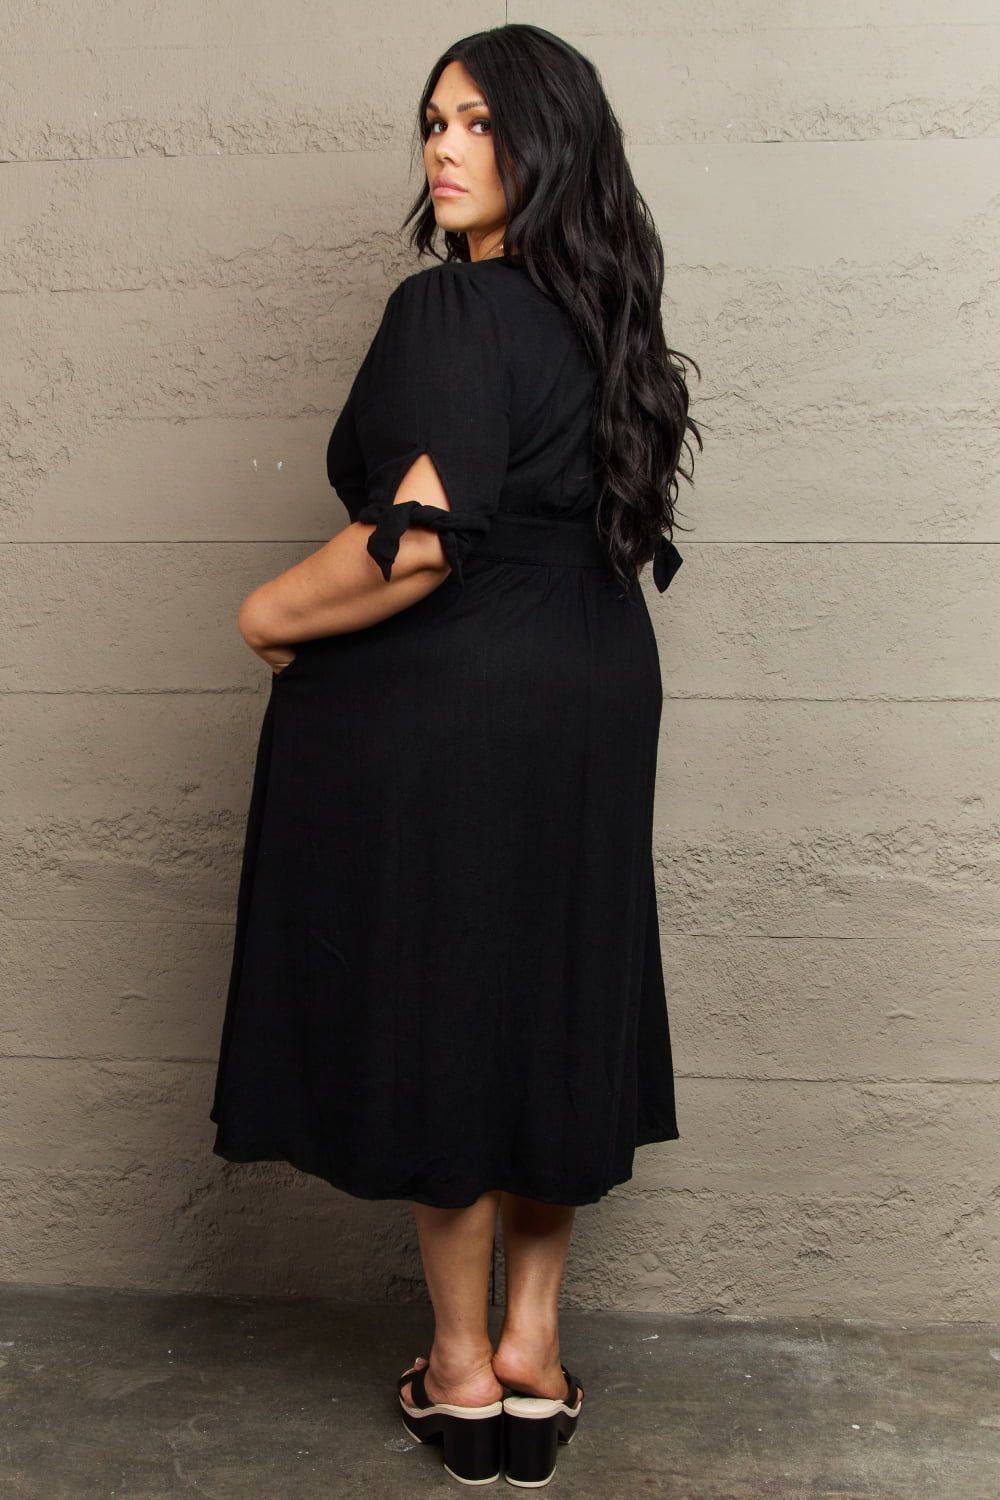 HEYSON Downtown Girl Textured Linen Button Down Midi Dress - AnnRose Boutique